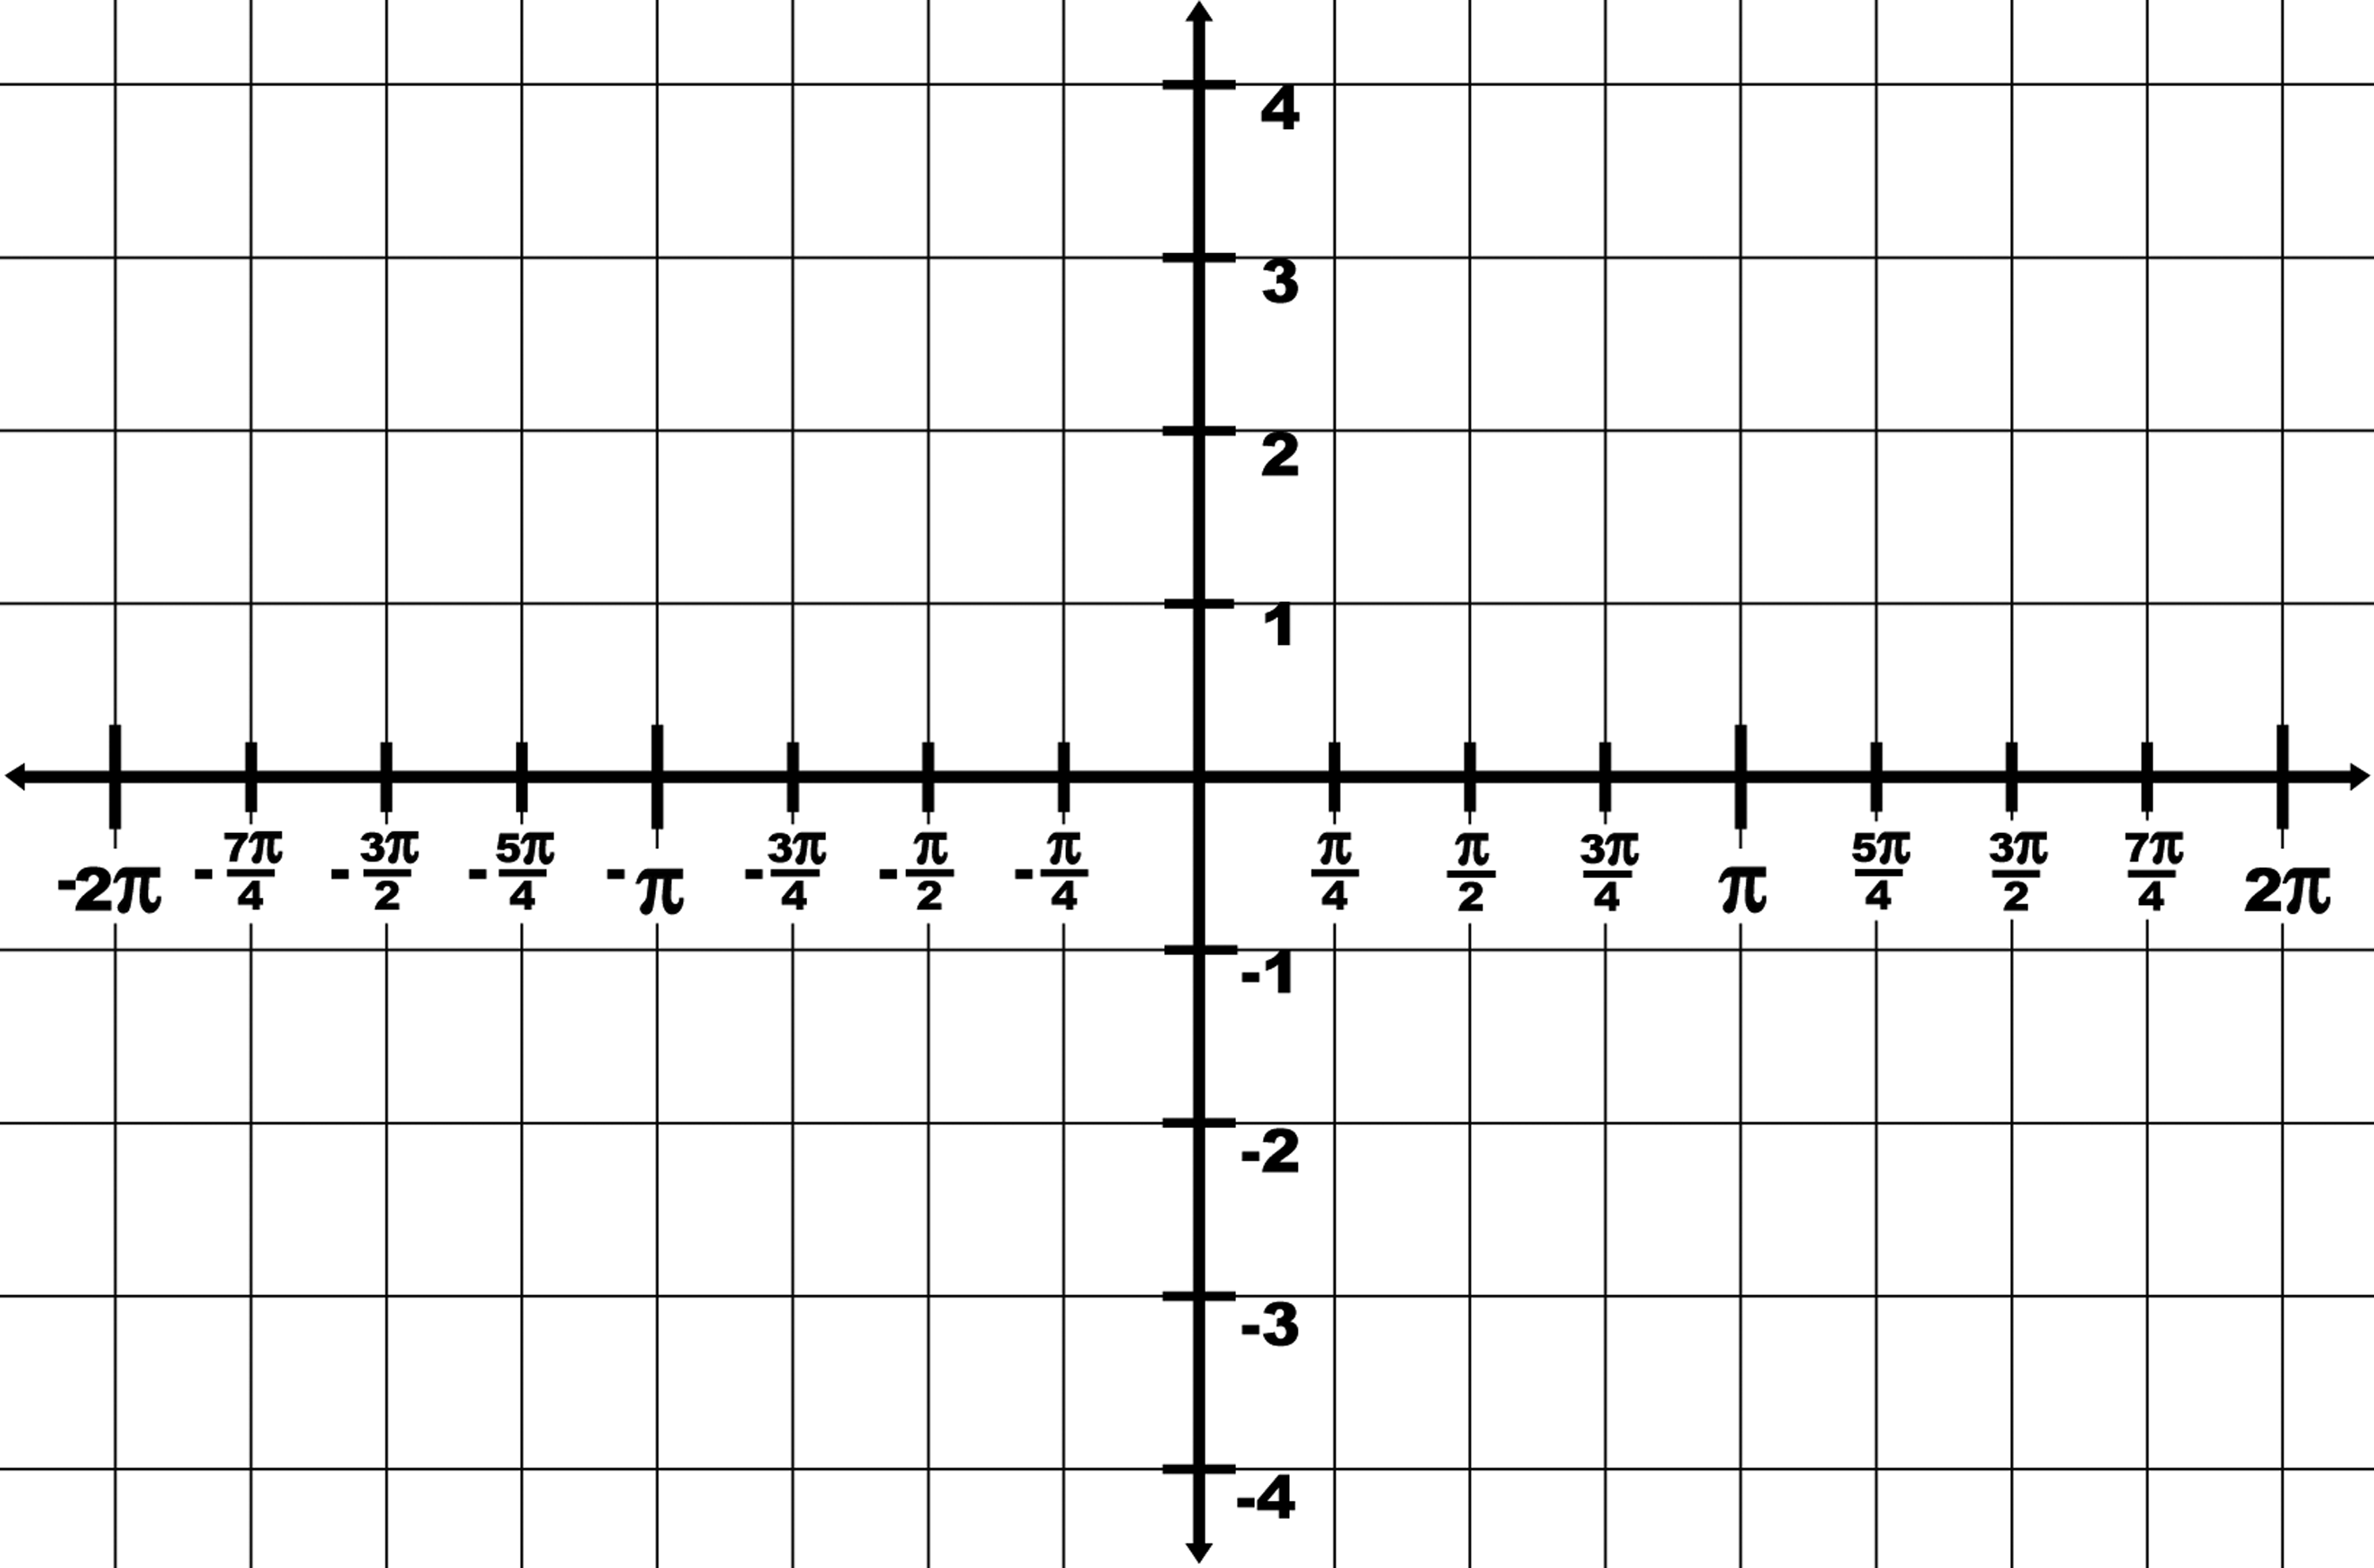 Trigonometry Grid With Domain -2π to 2π And Range -4 to 4 | ClipArt ETC